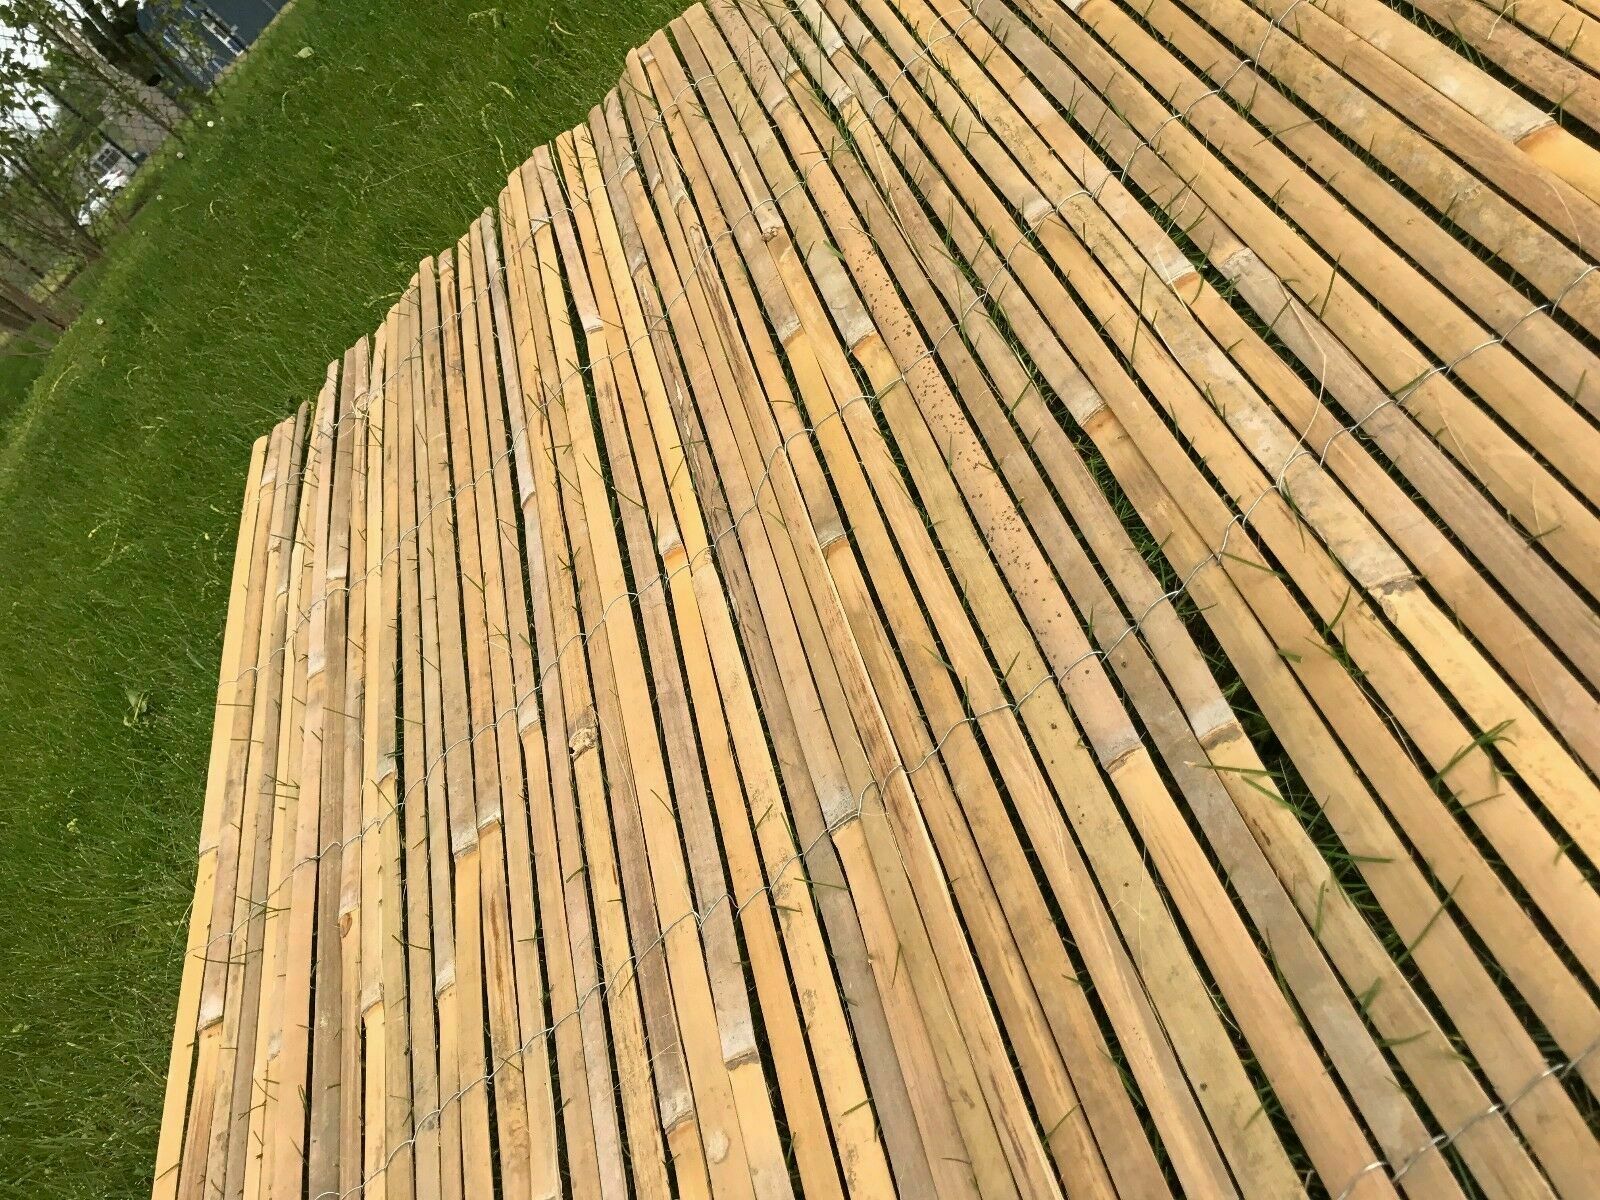 Bamboo Split Slat Fencing Screening Rolls for Garden Outdoor Privacy